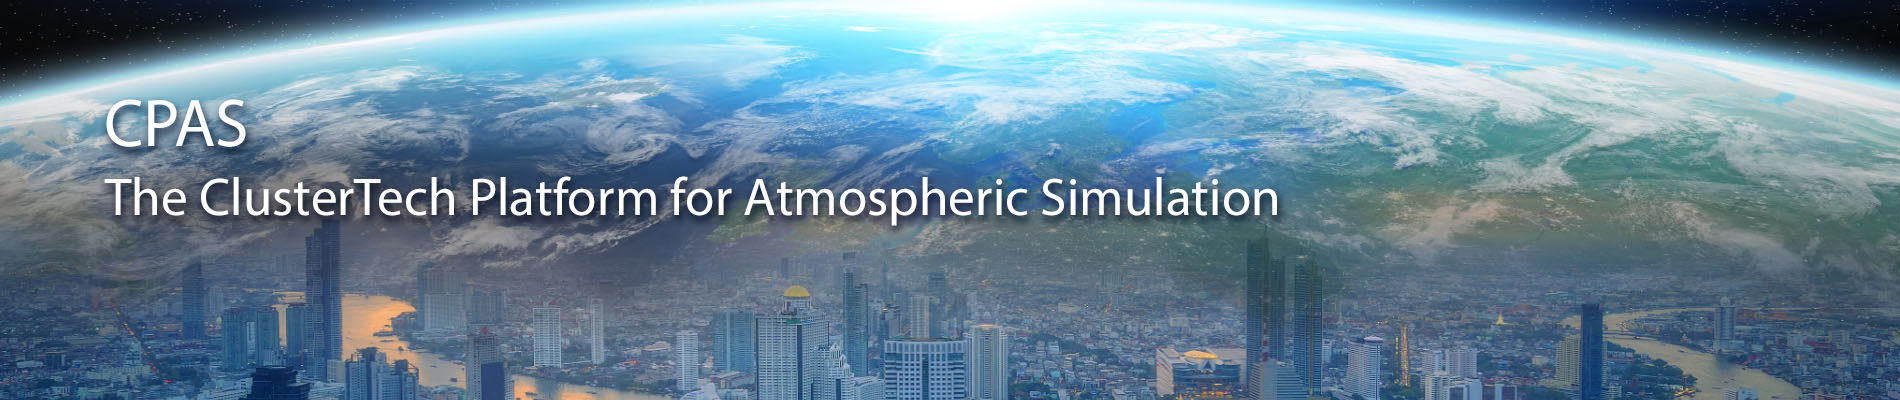 CPAS-The ClusterTech Platform for Atmospheric Simulation